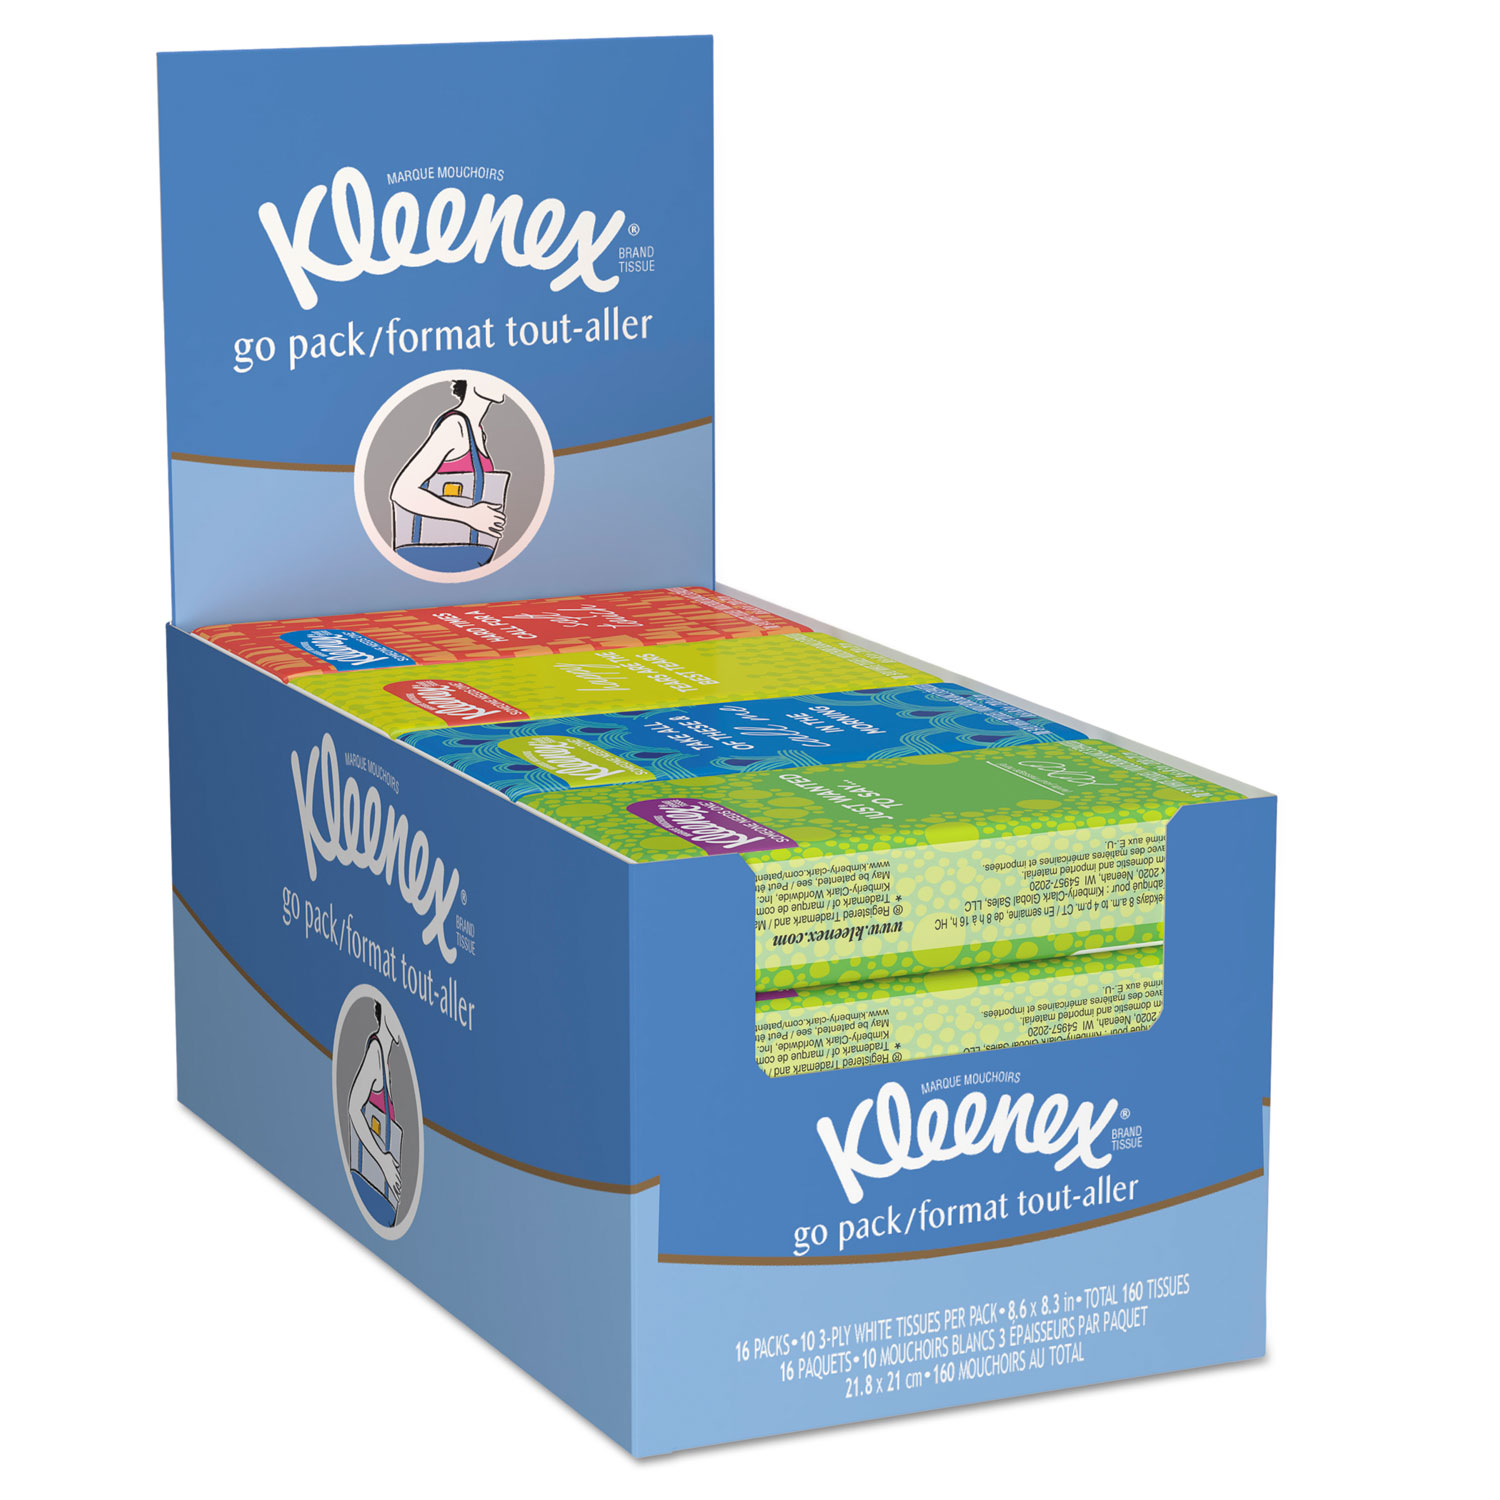  Kleenex KCC 11975 On The Go Packs Facial Tissues, 3-Ply, White, 10 Sheets/Pack, 16 Packs/Box, 12 Boxes/Carton (KCC11975) 